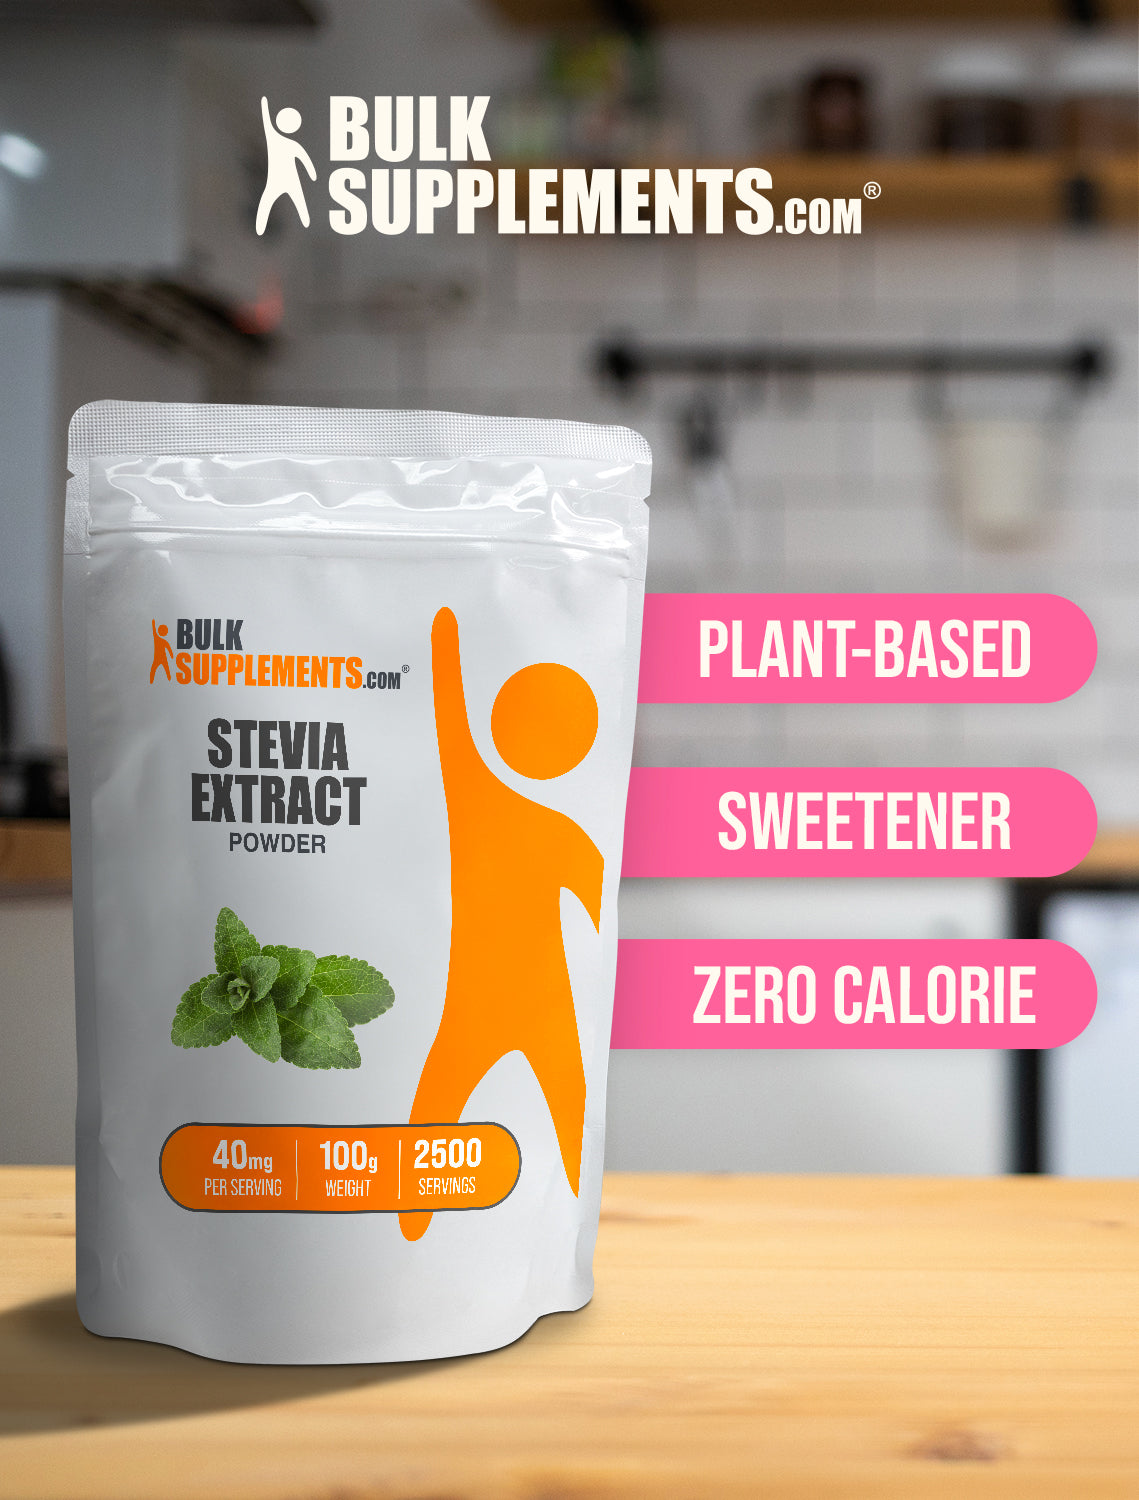 Stevia extract powder keyword image 100g